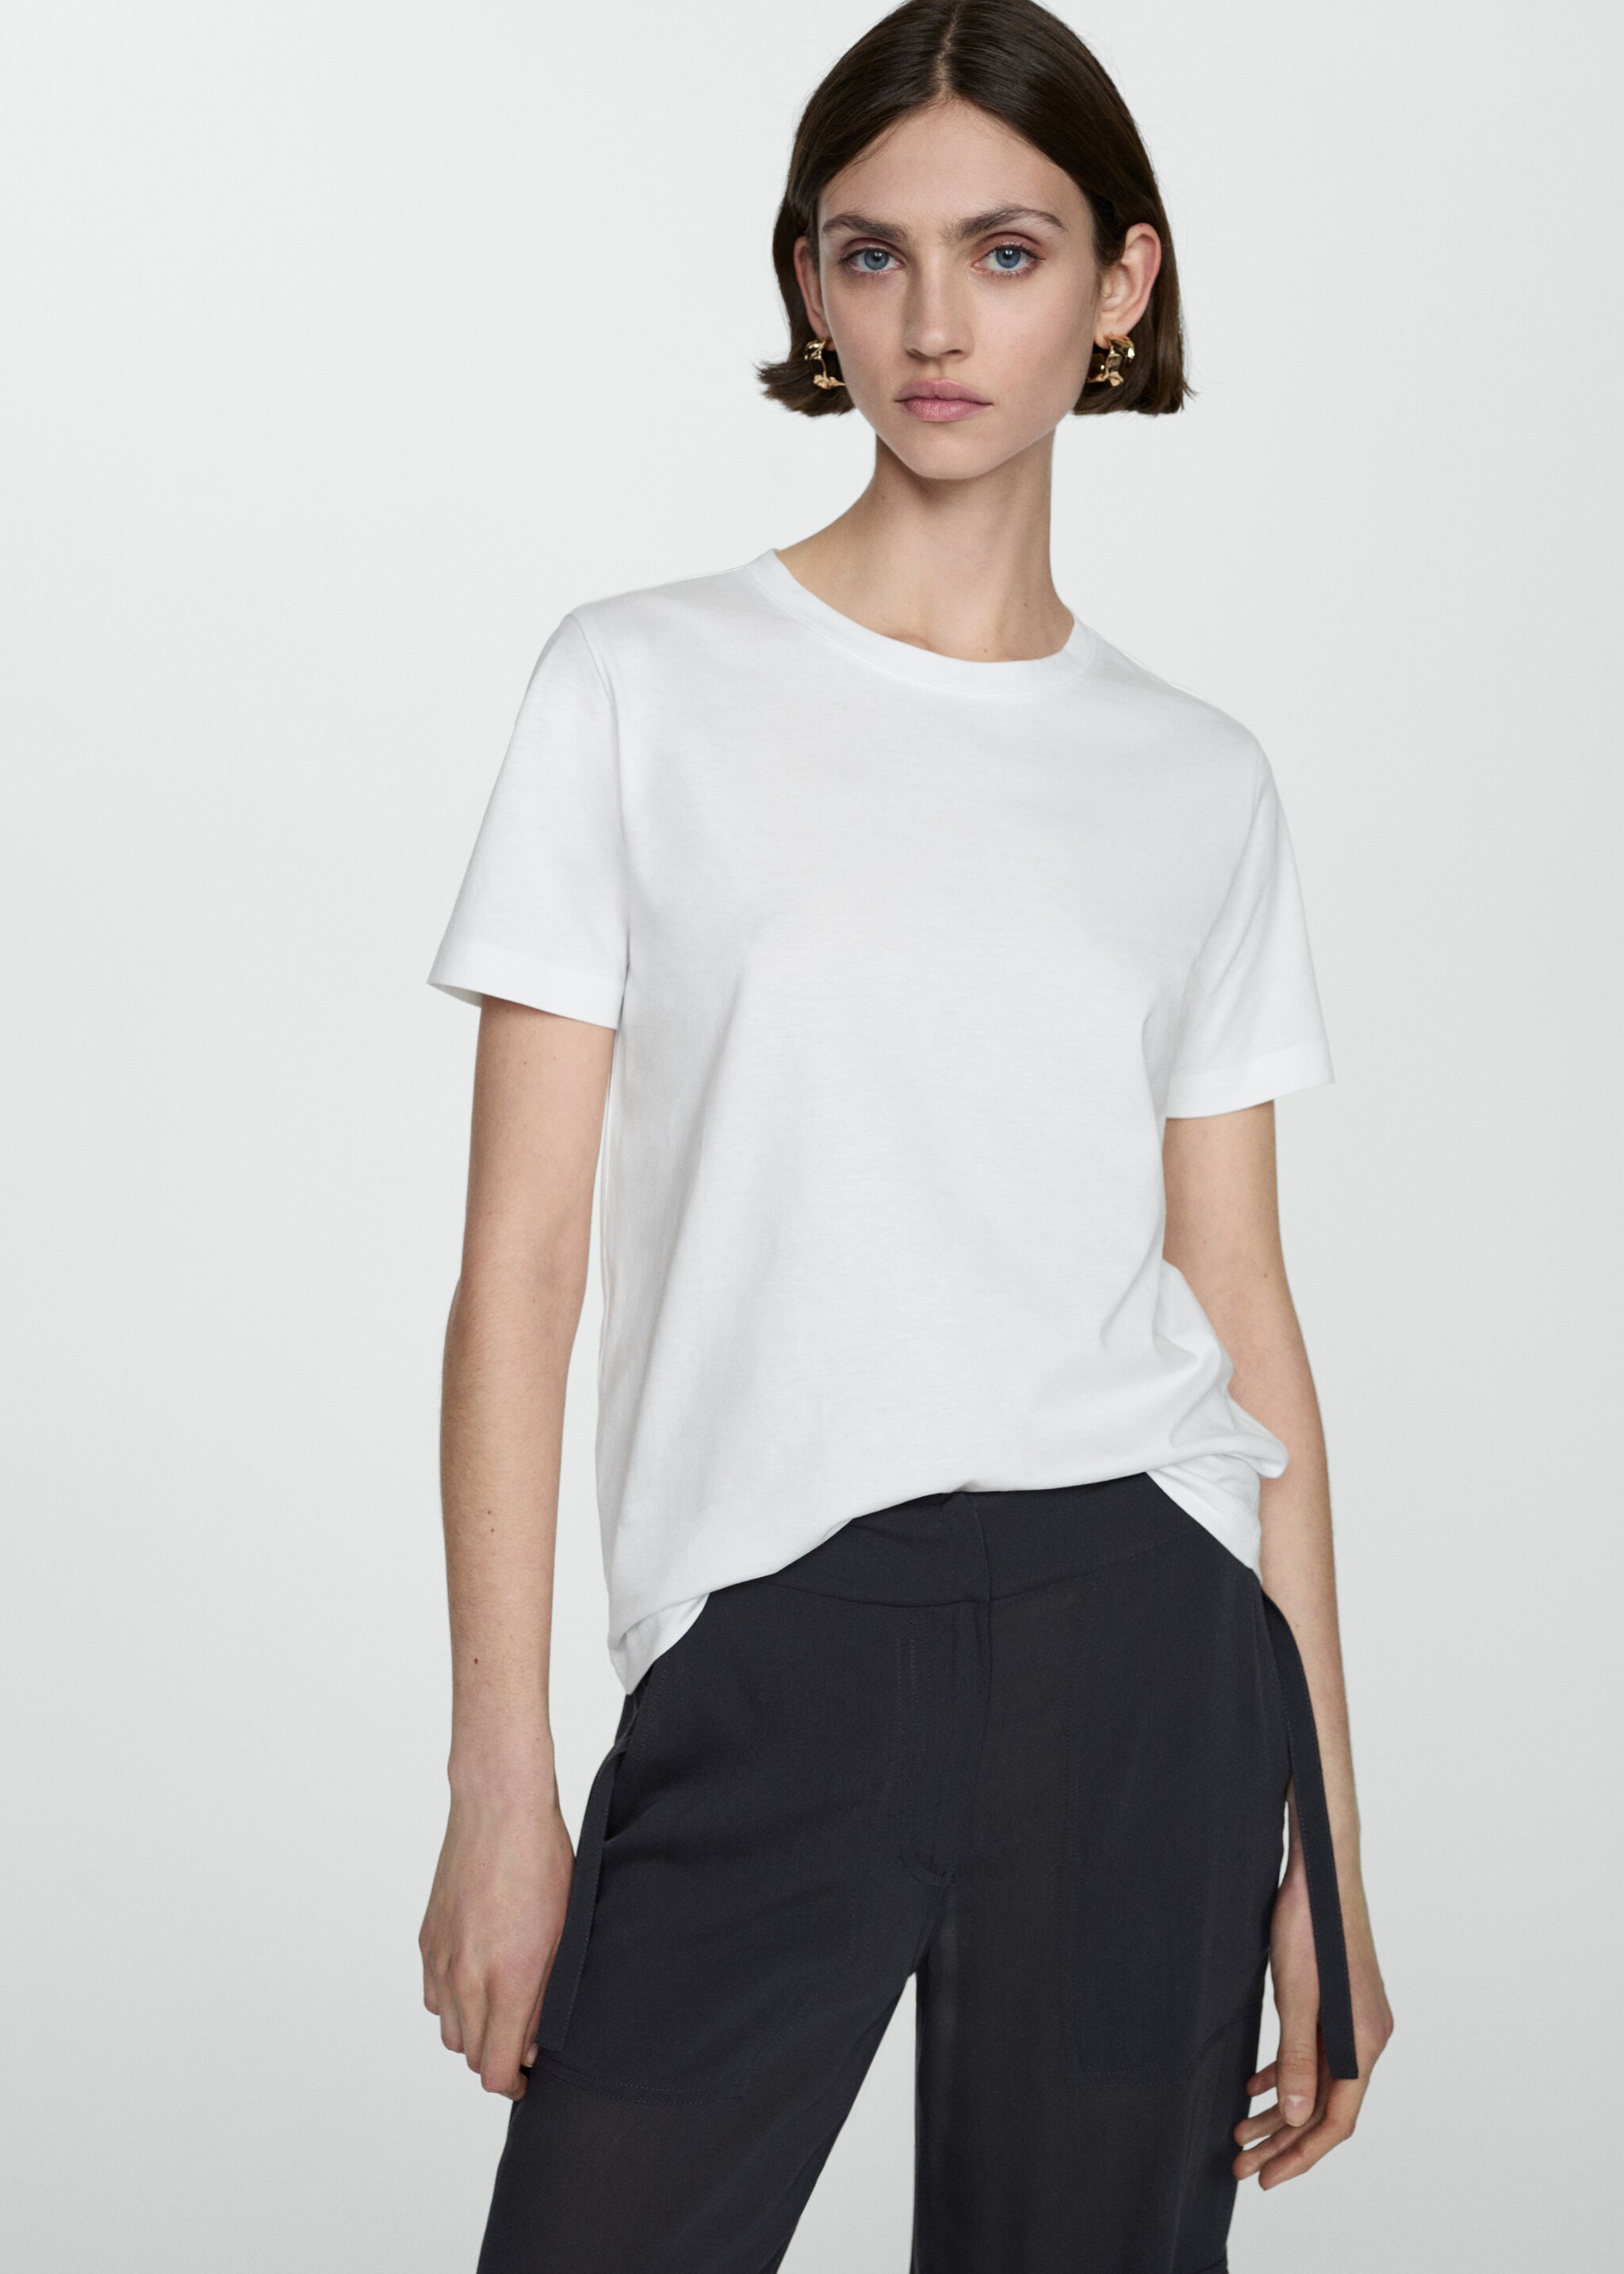 Short-sleeved cotton t-shirt - Medium plane